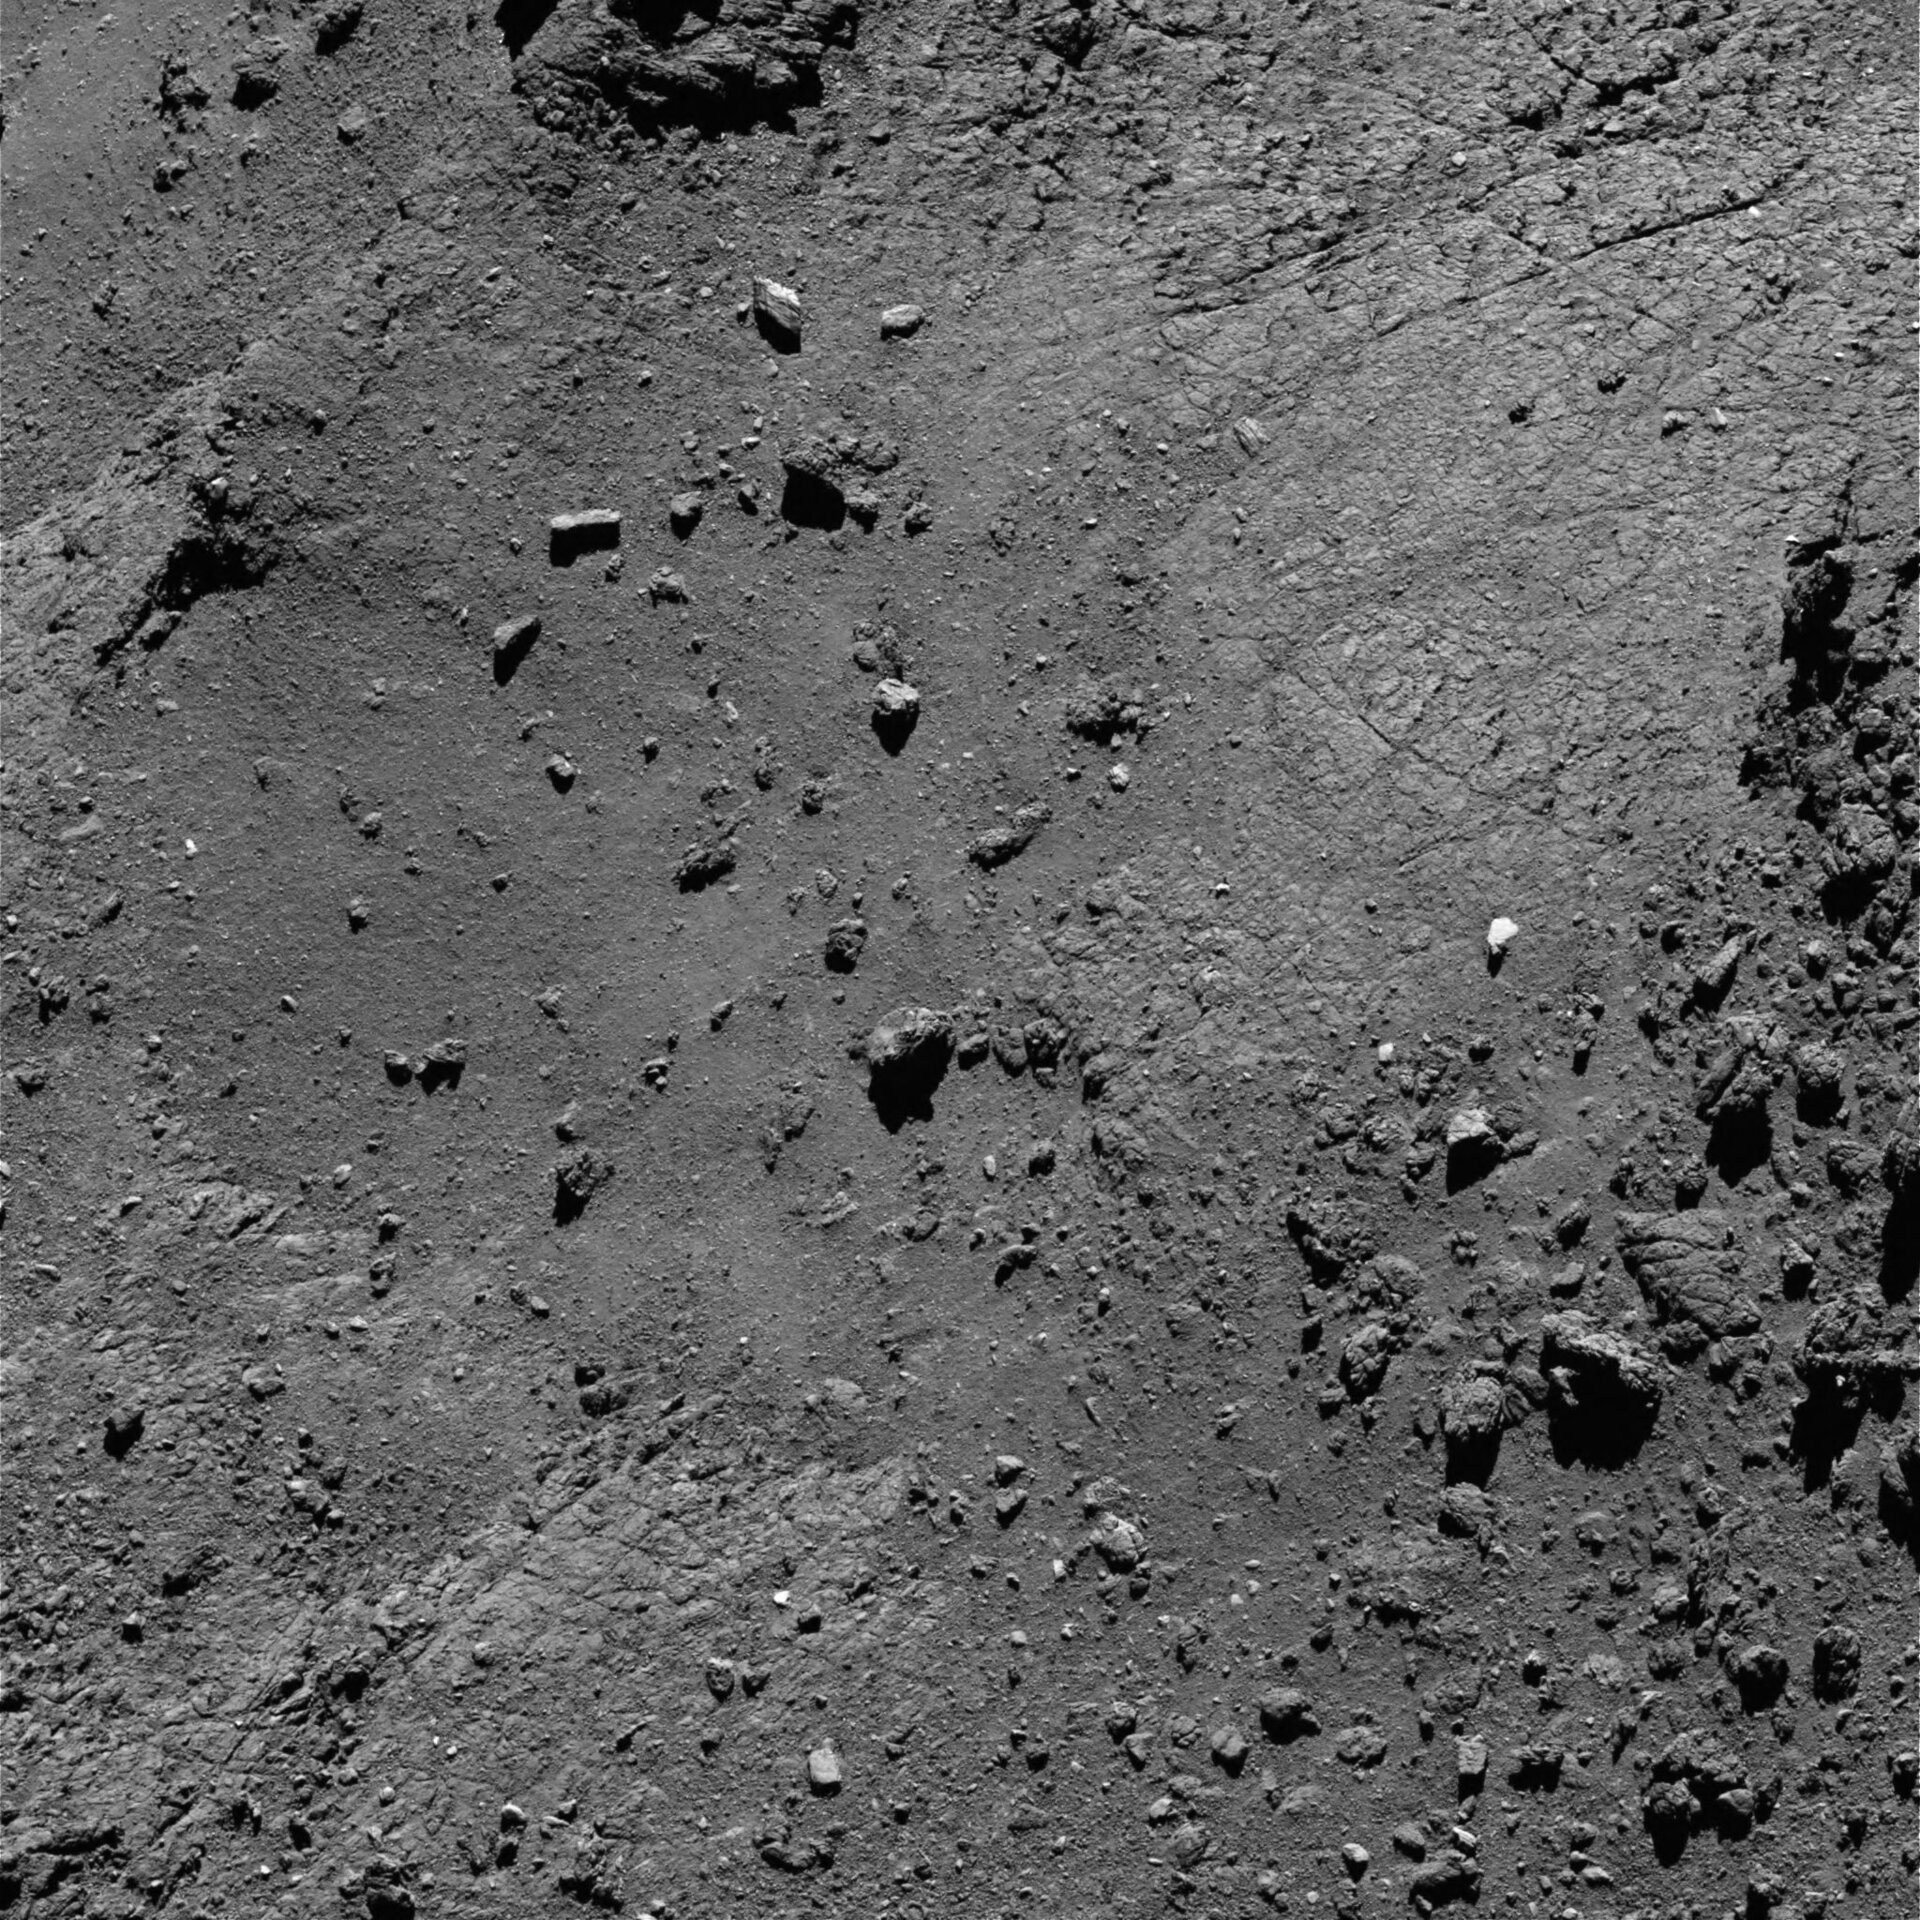  Comet on 15 August 2016 – OSIRIS narrow-angle camera 